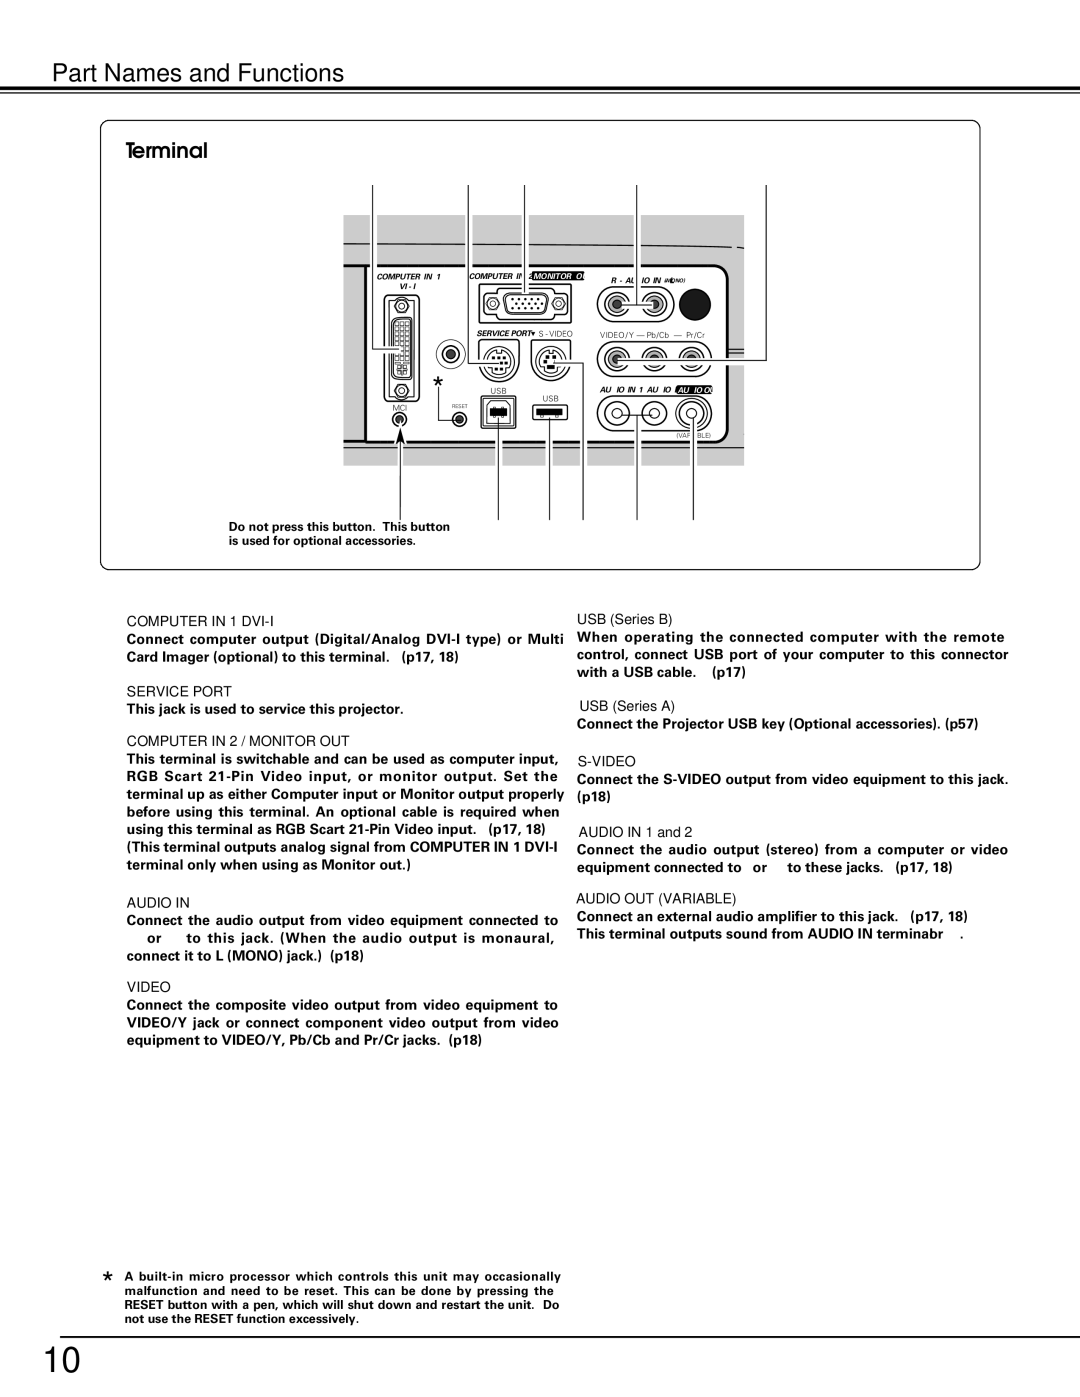 Sanyo PLC-XU60, PLC-SU60 owner manual Part Names and Functions, Terminal 